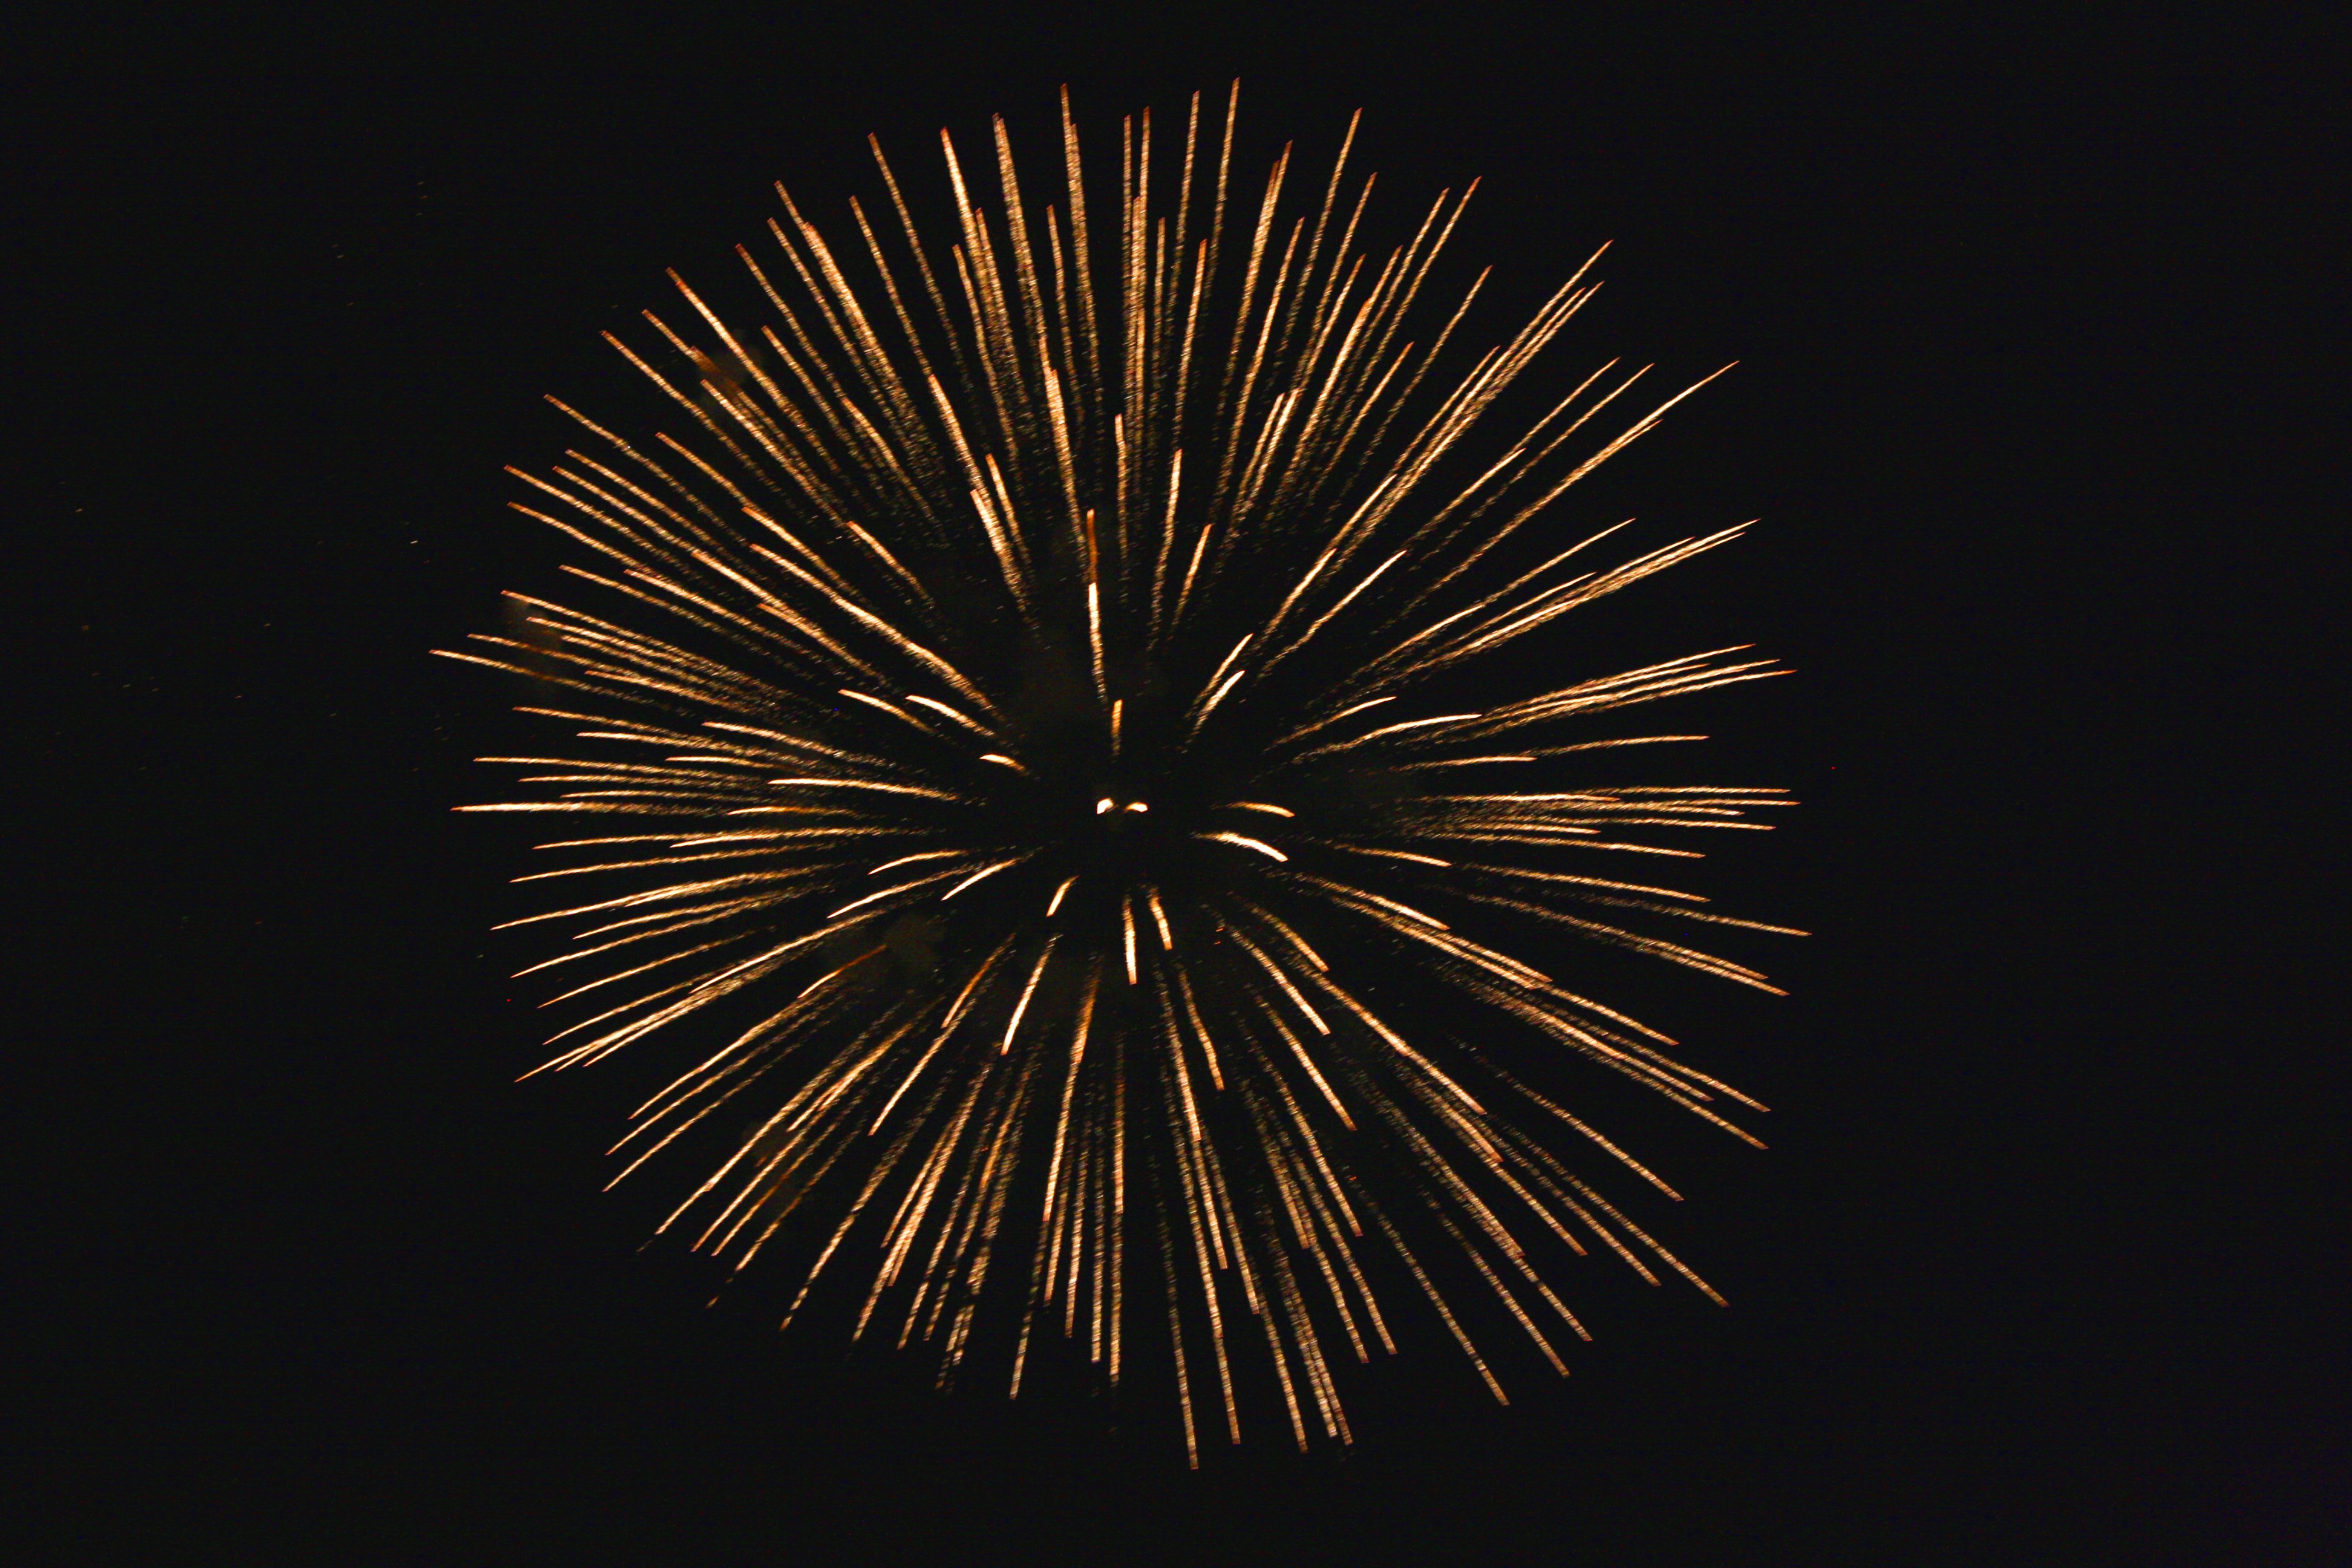 Golden Starburst Fireworks   Free High Resolution Photo   Dimensions